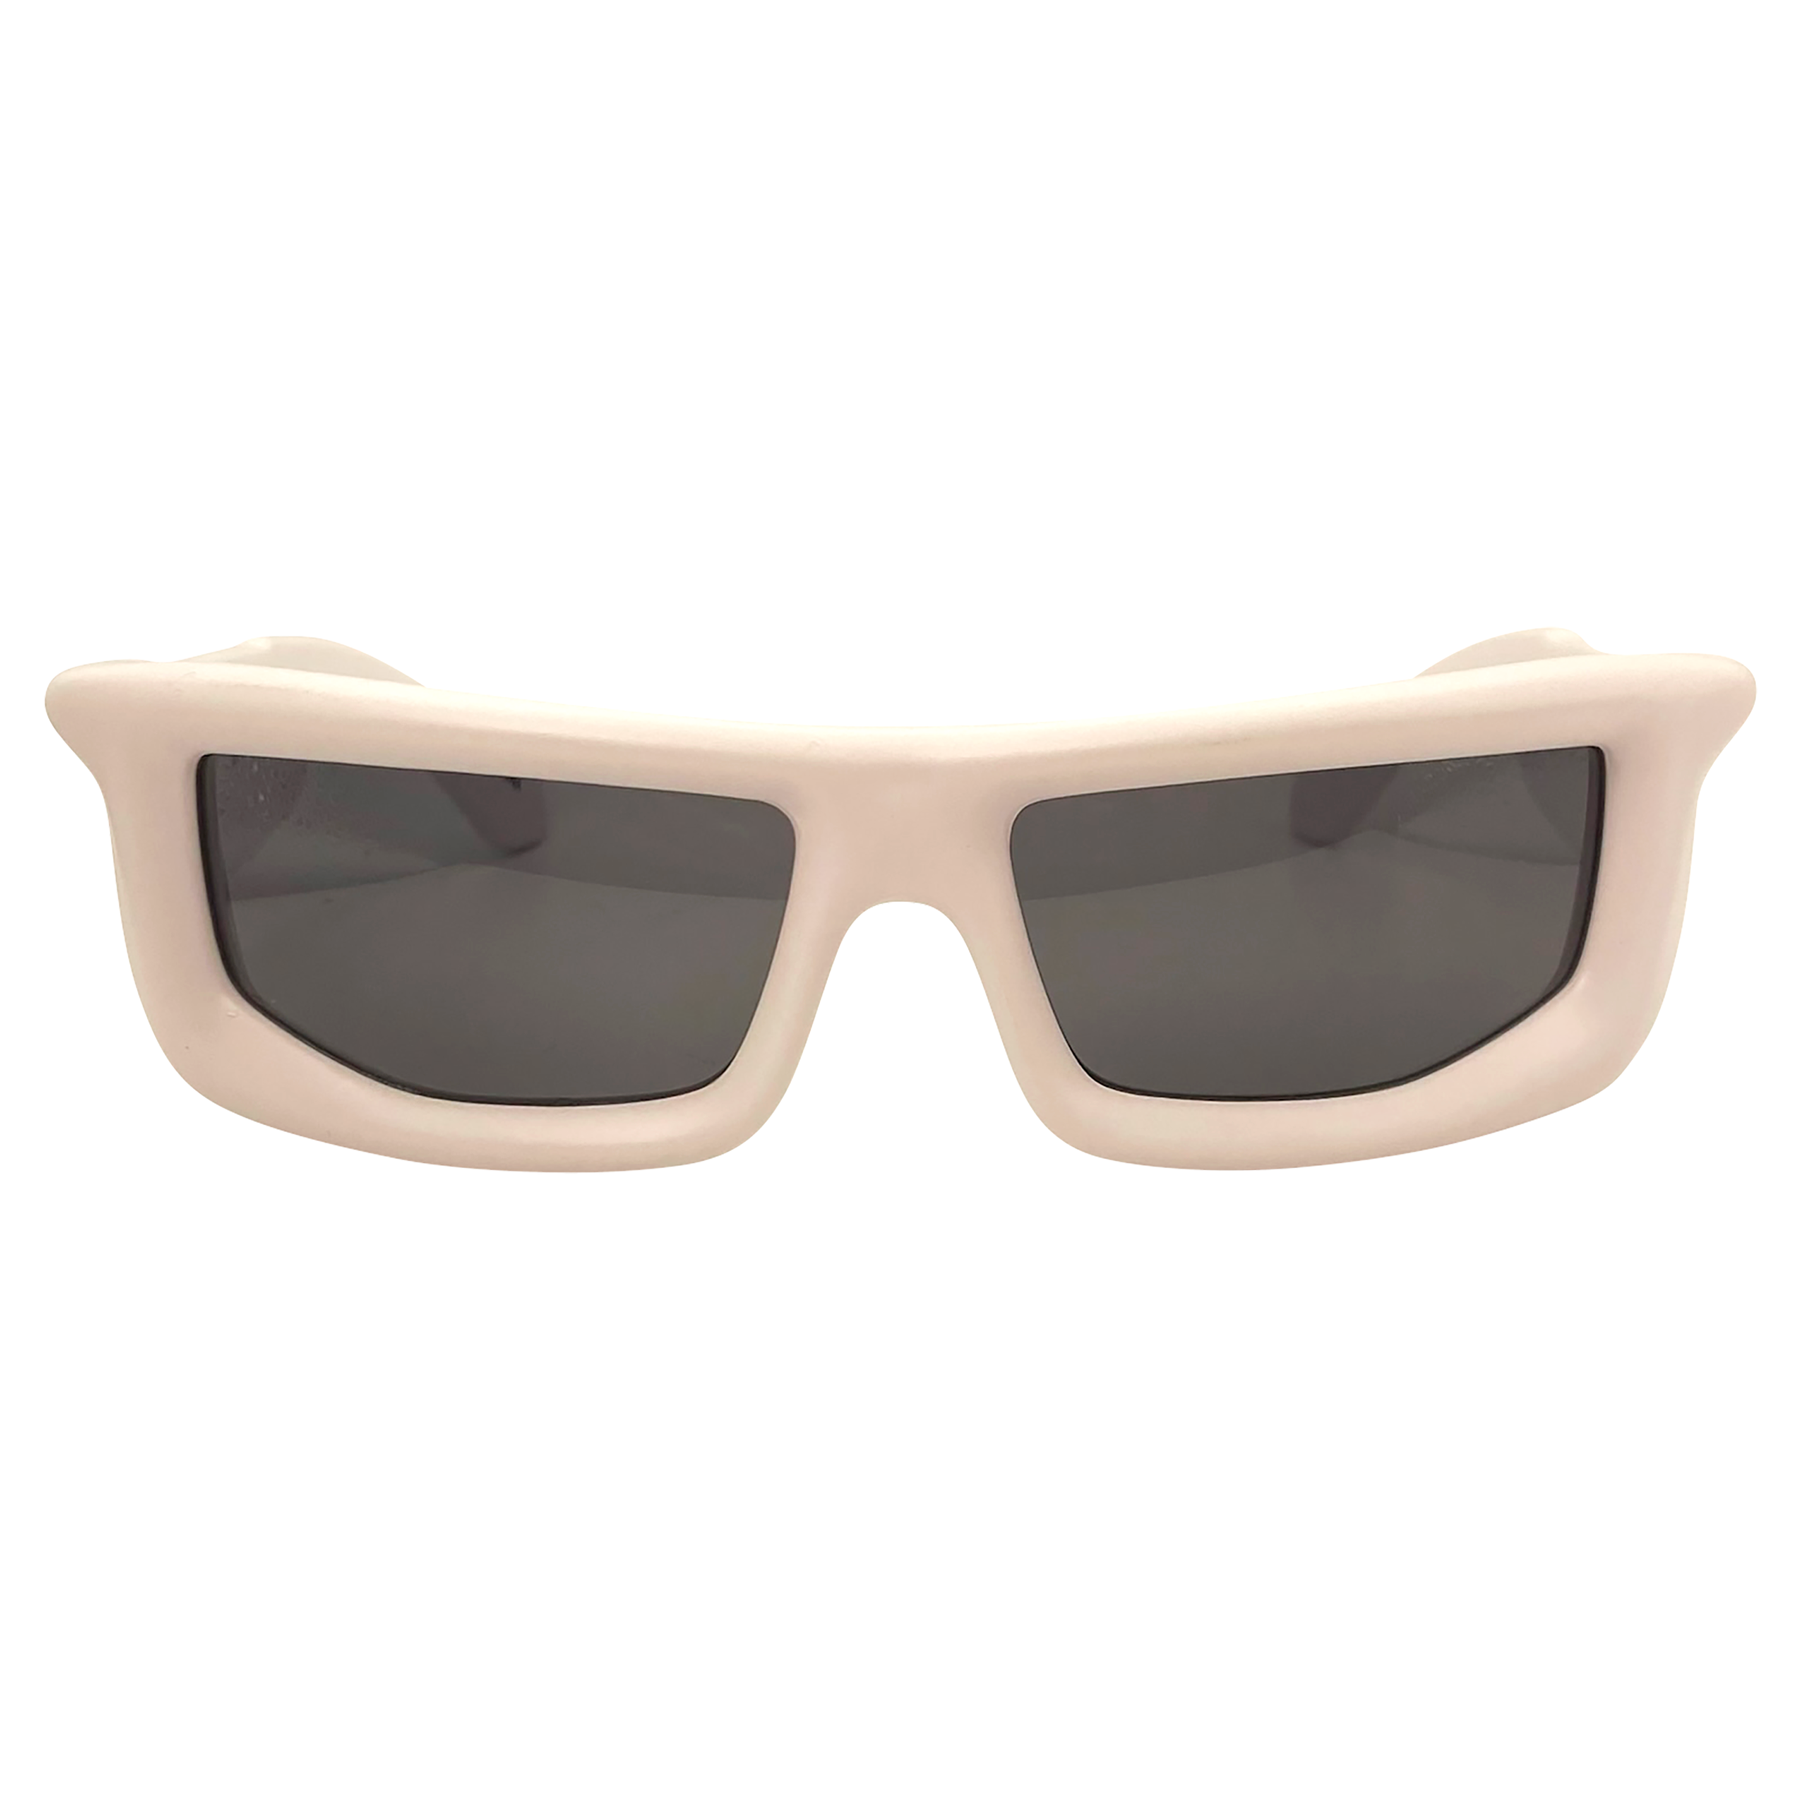 shield sunglasses mens and unisex sleek futuristic shield sunglasses